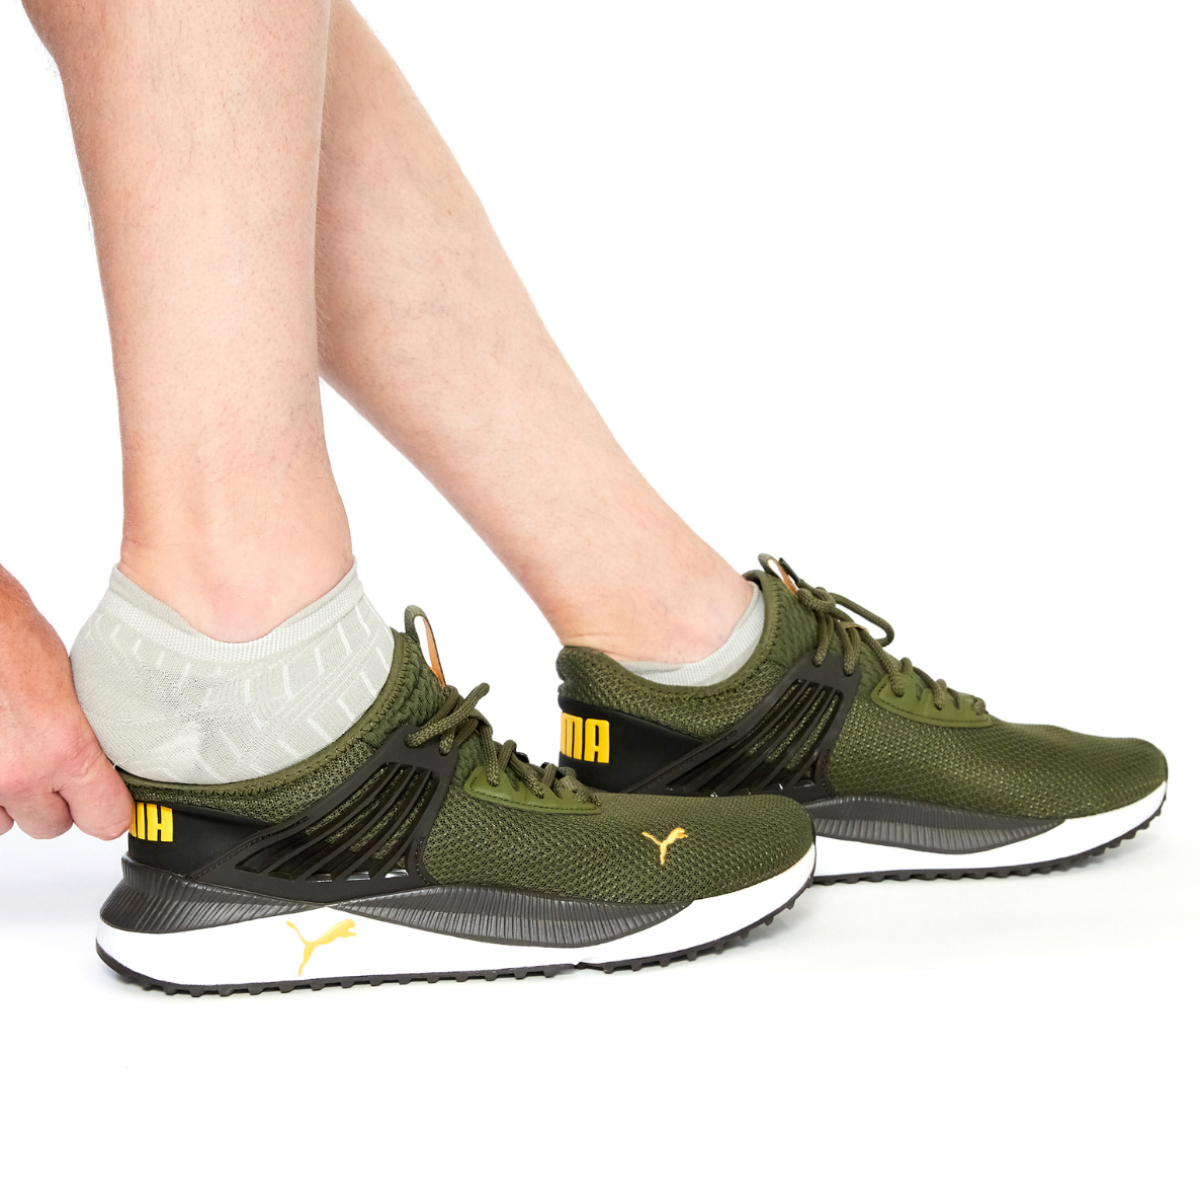 PNP Athletic Shoes (ZHOEBLESS) - W/ Free 1 Socks